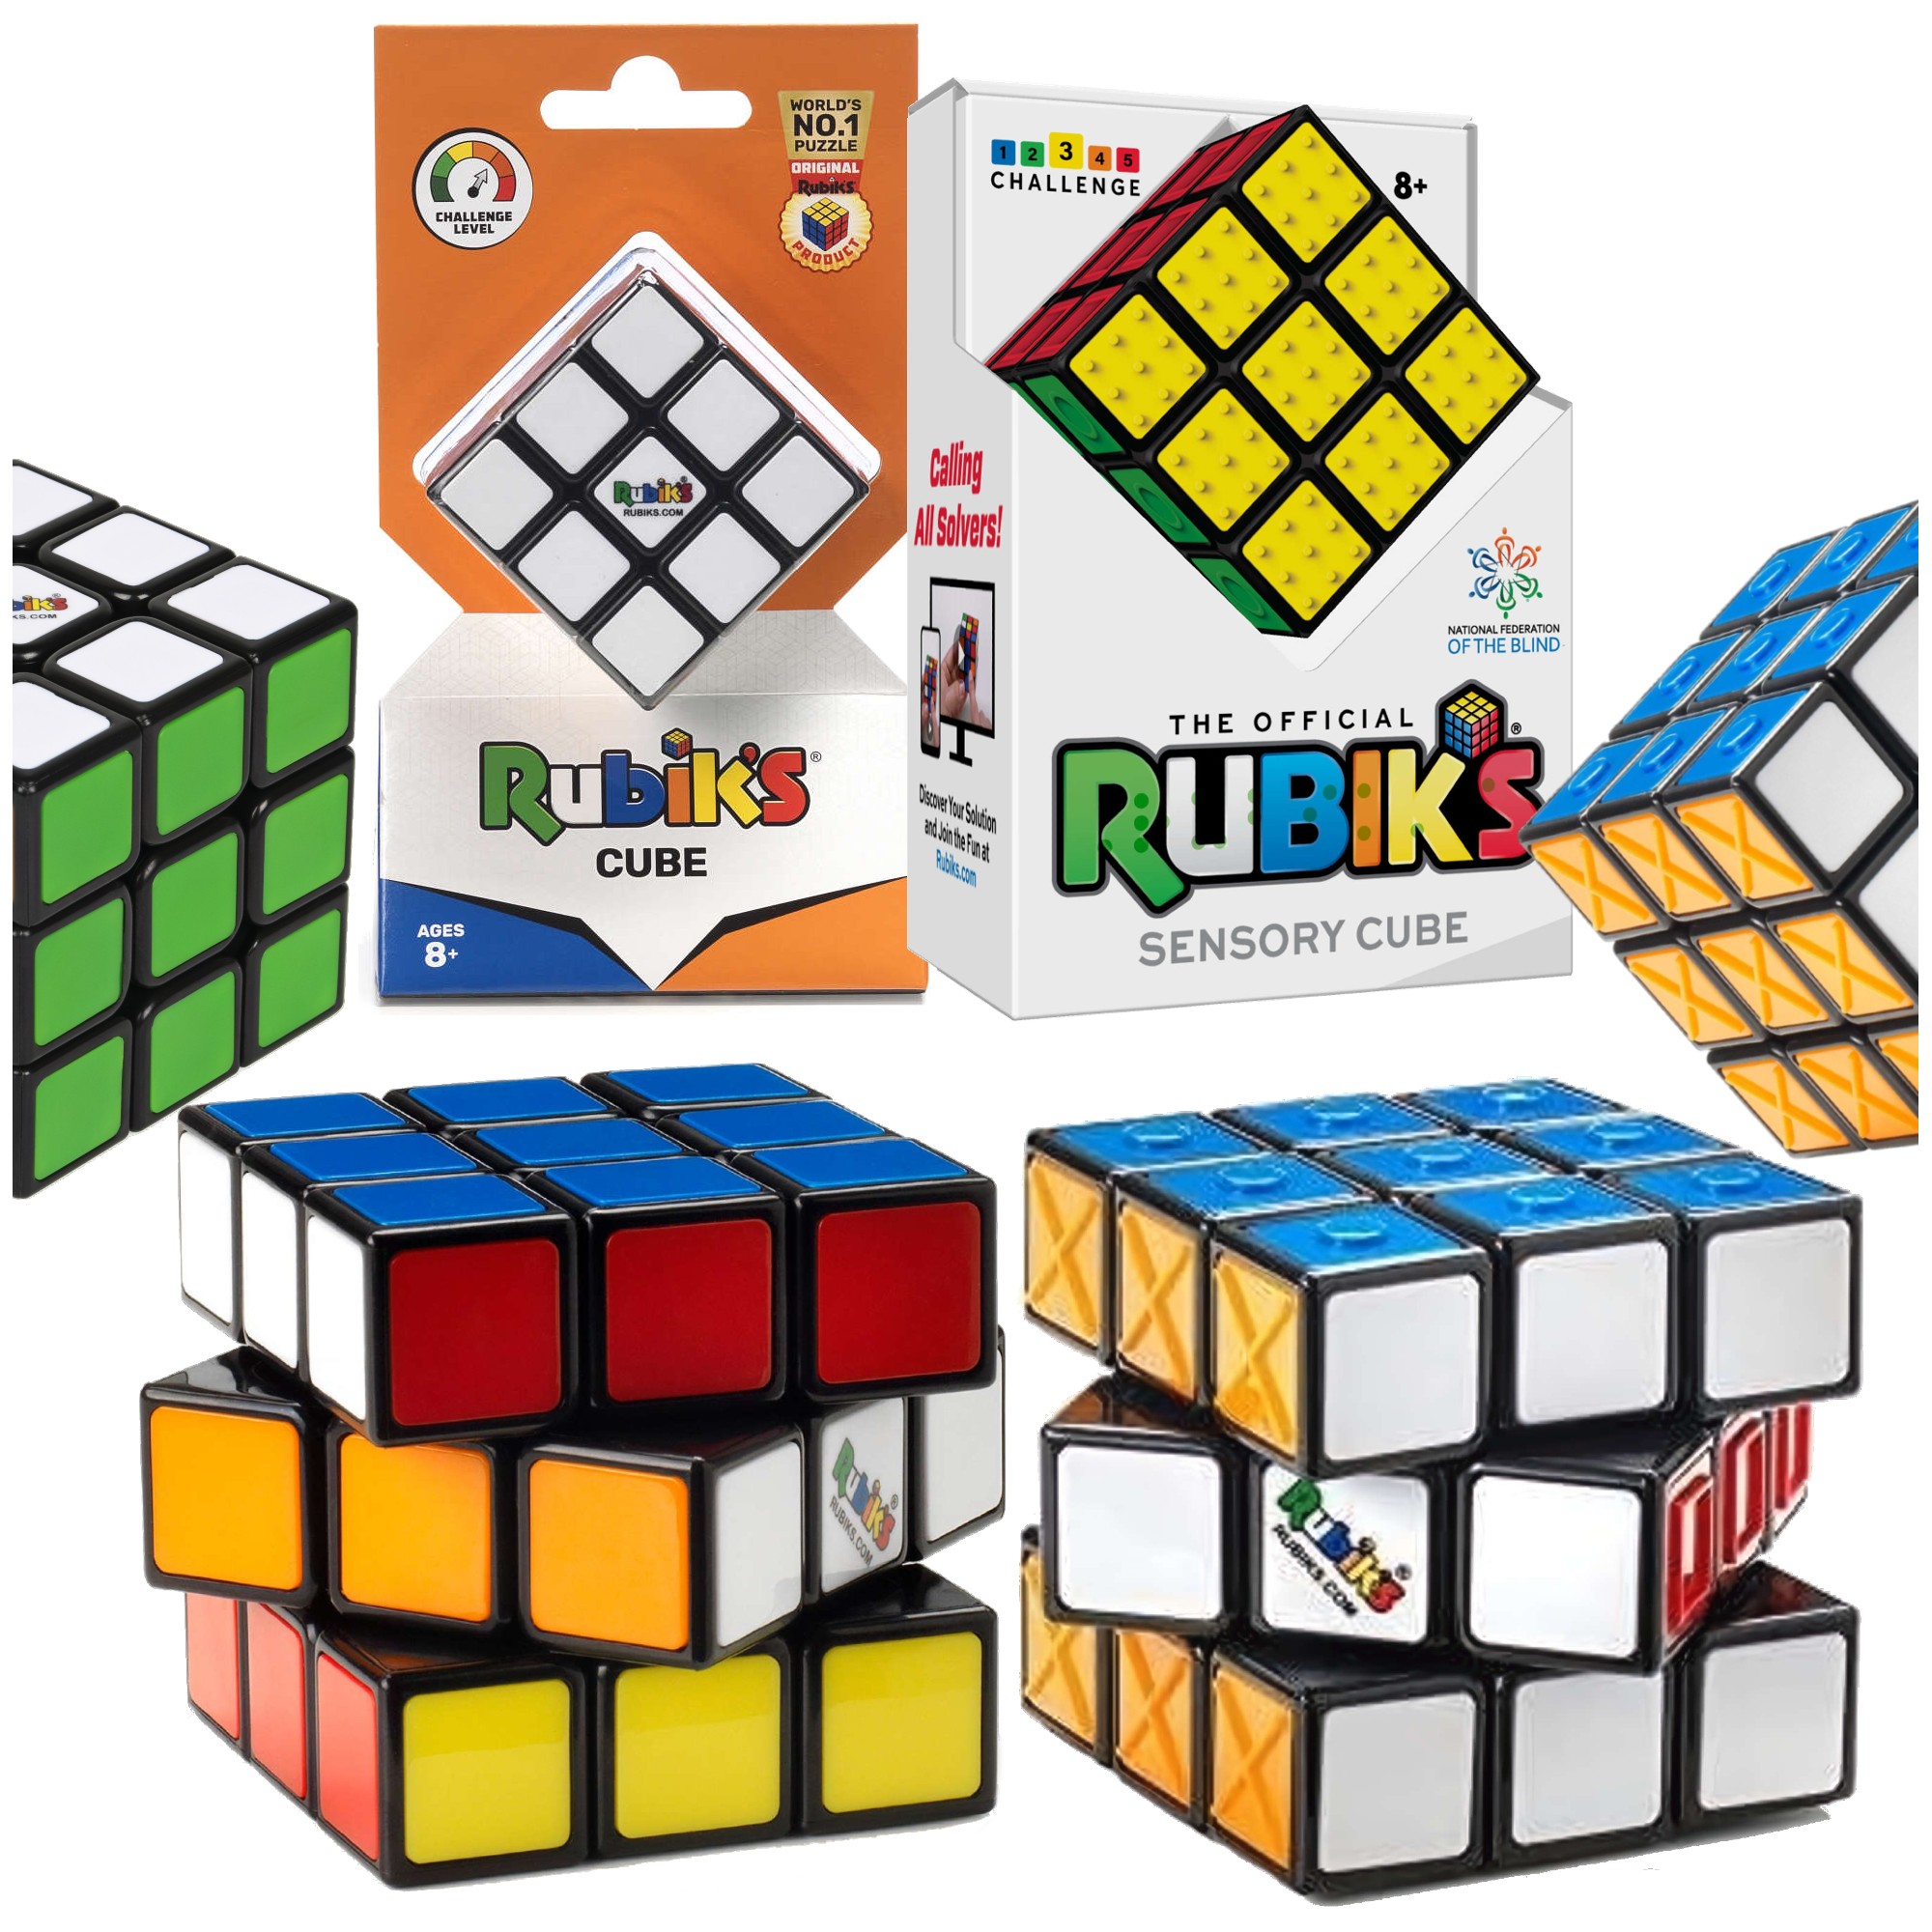 Oryginalne Kostki Rubika Cube 3x3 Rubik's oraz Sensory Cube